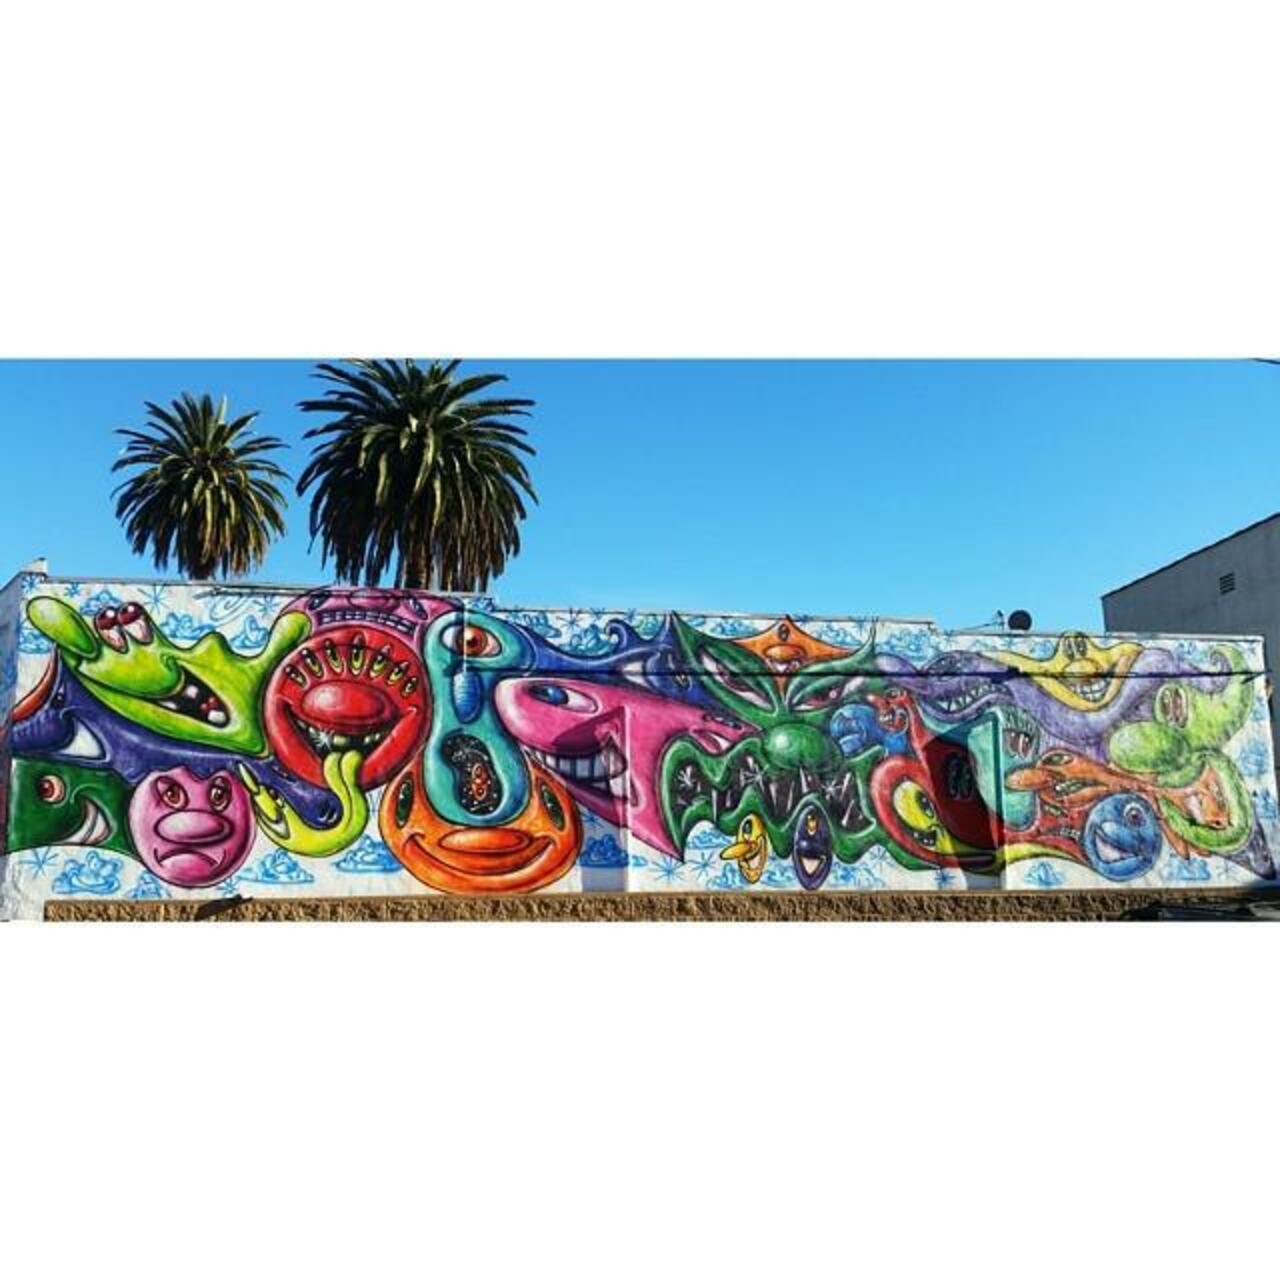 Funny Monsters on Adams Blvd #streetart #graffiti #streetartLA #UrbanLandscape #PalmTrees #mural by @kennyscharf #K… http://t.co/hEljU4vIas